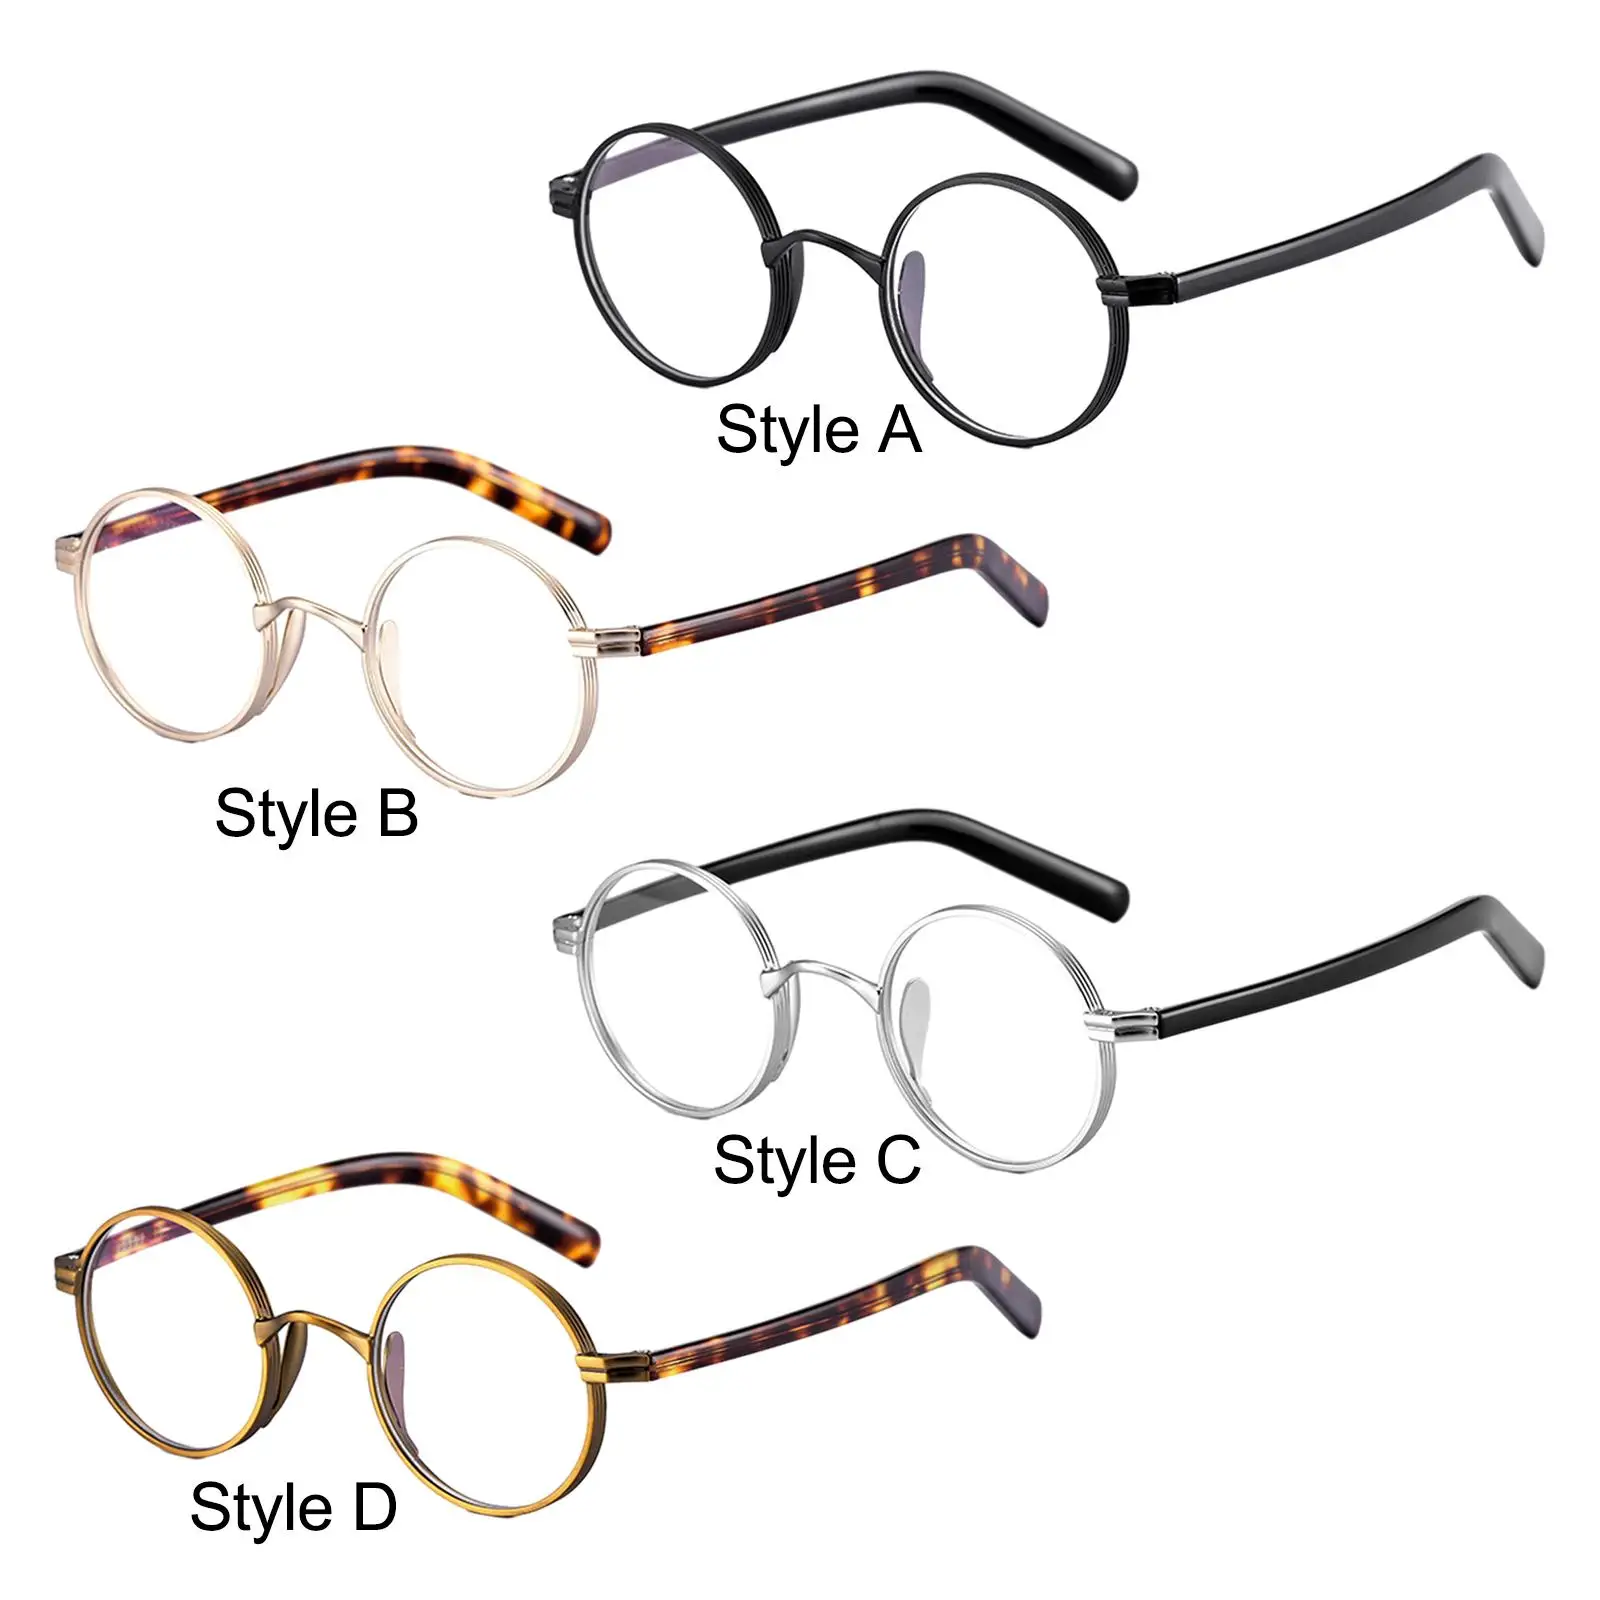 Glasses Frames Eyewear Frames Oval for Women Men, Classical Retro Lightweight Titanium Alloy Eyeglass Frame Eyeglasses Frames